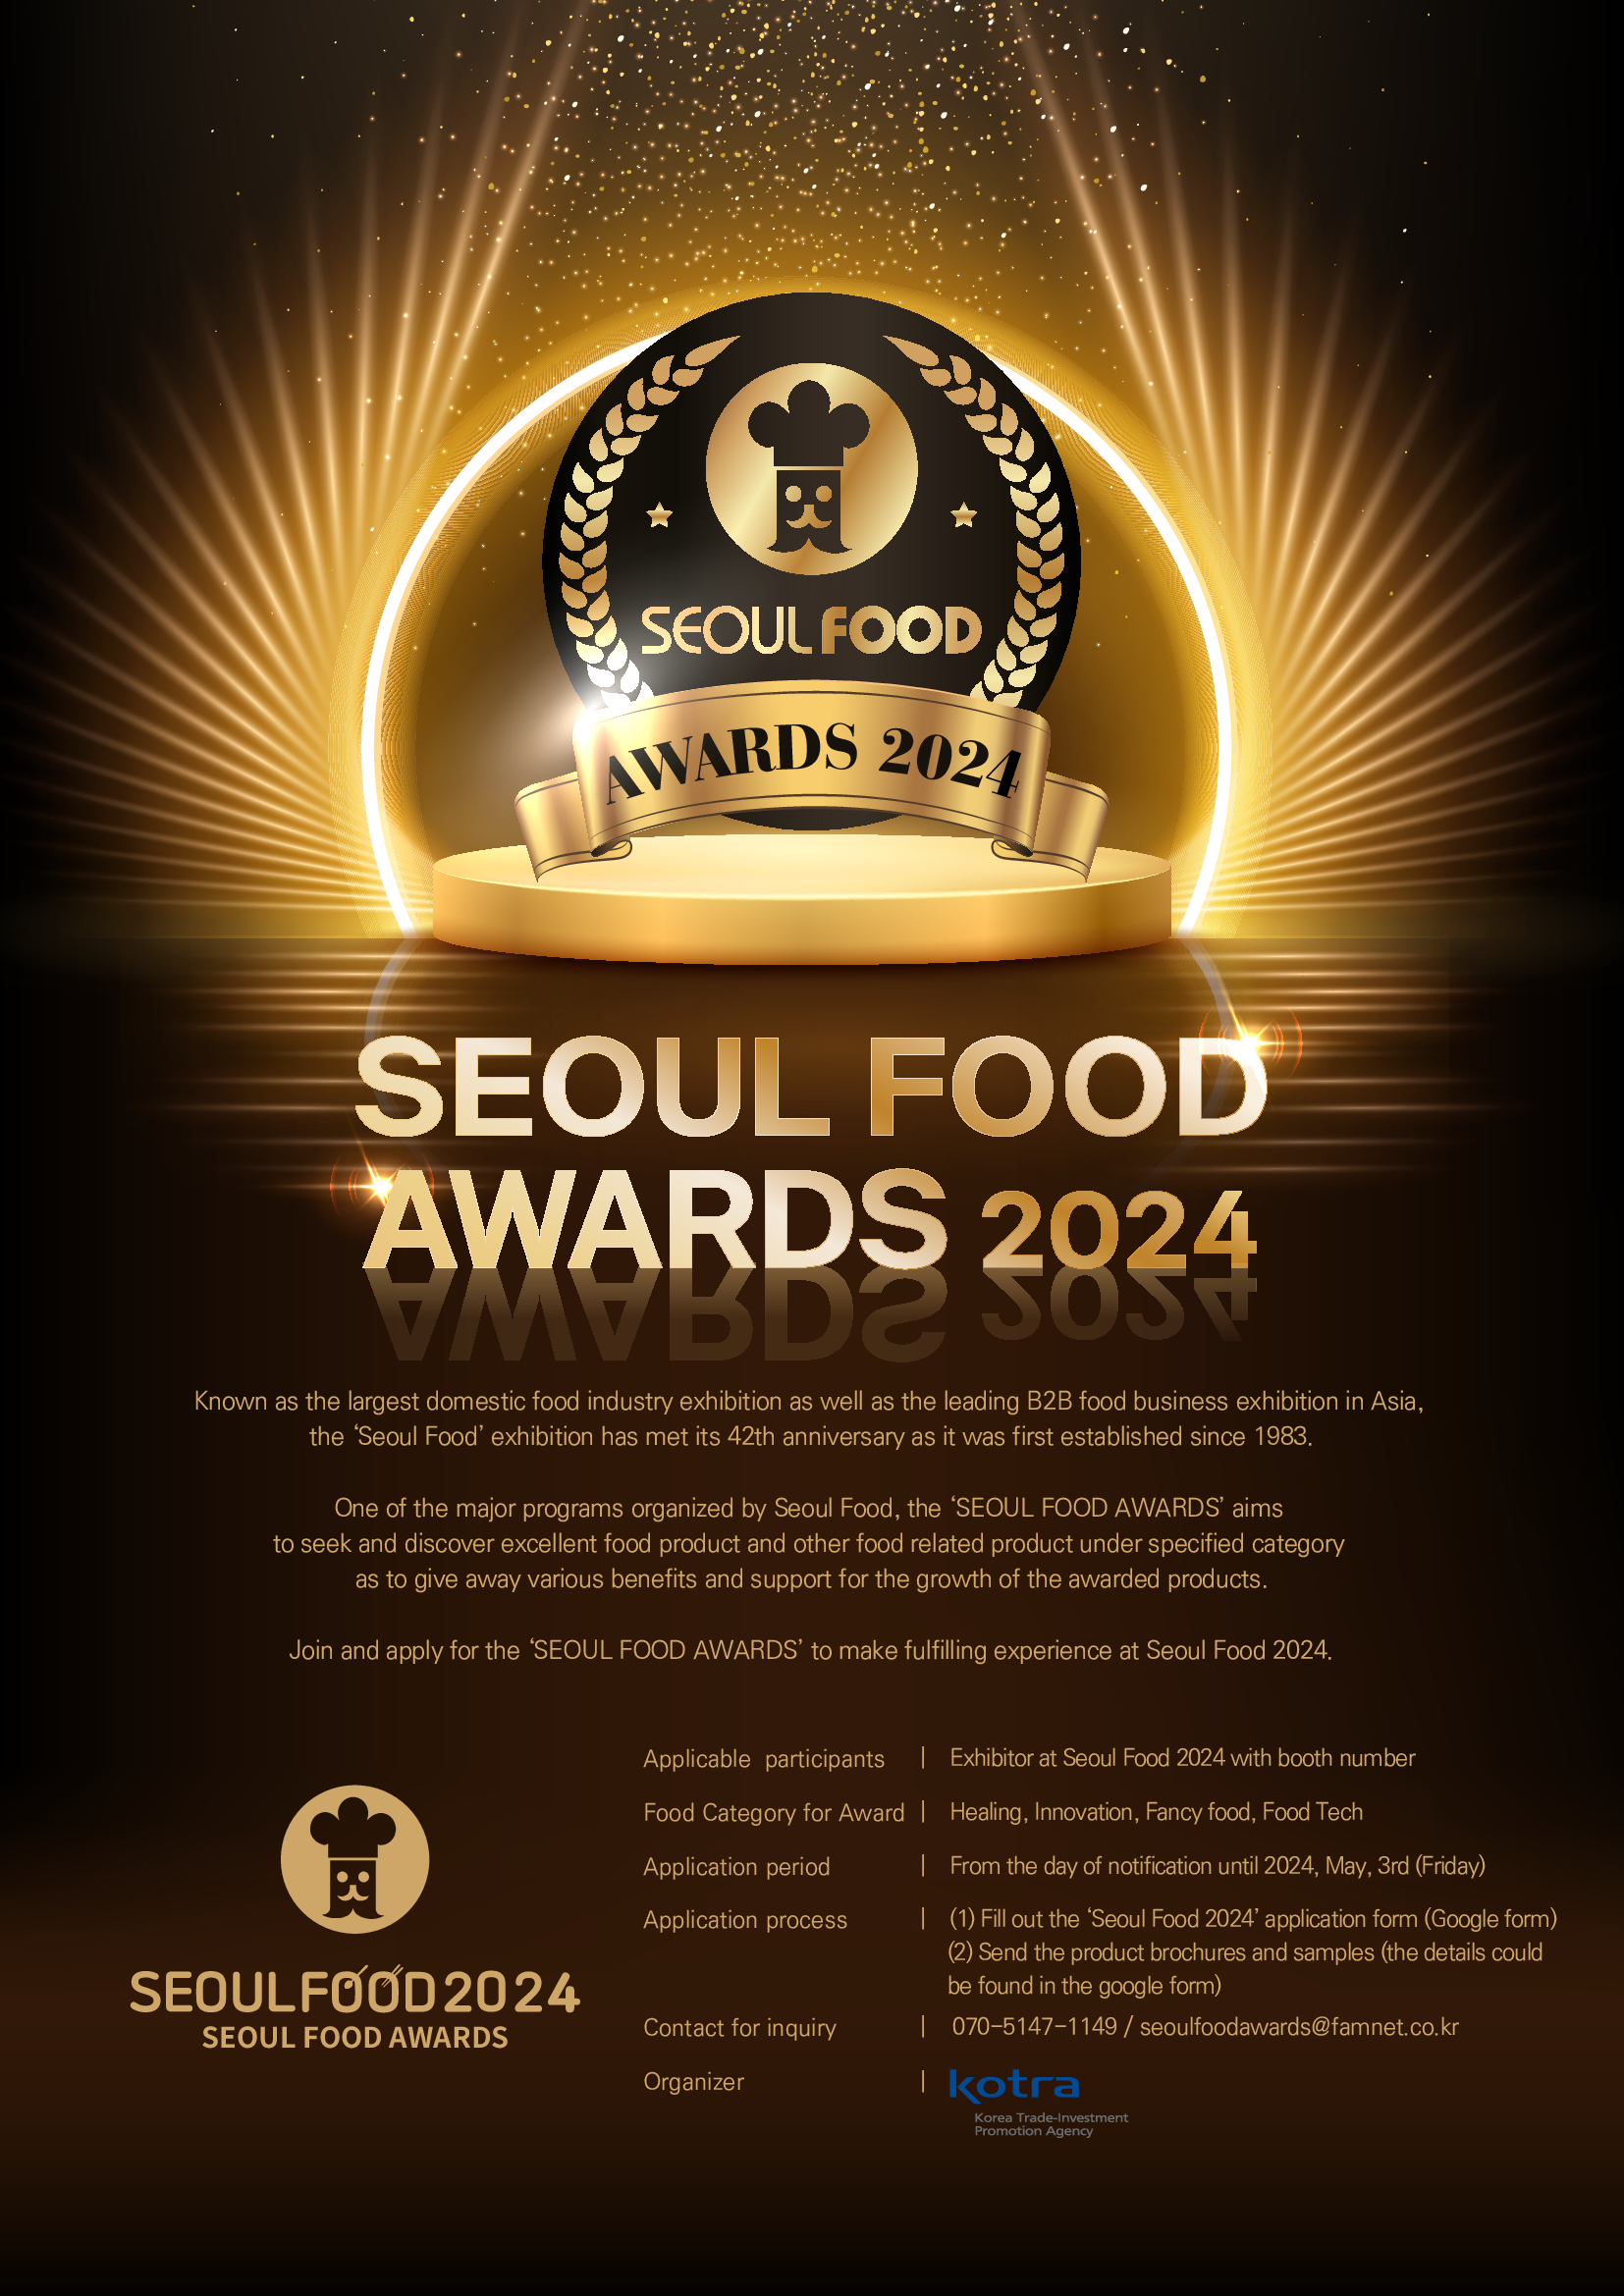 seoulfood_awards_2024_eng.png